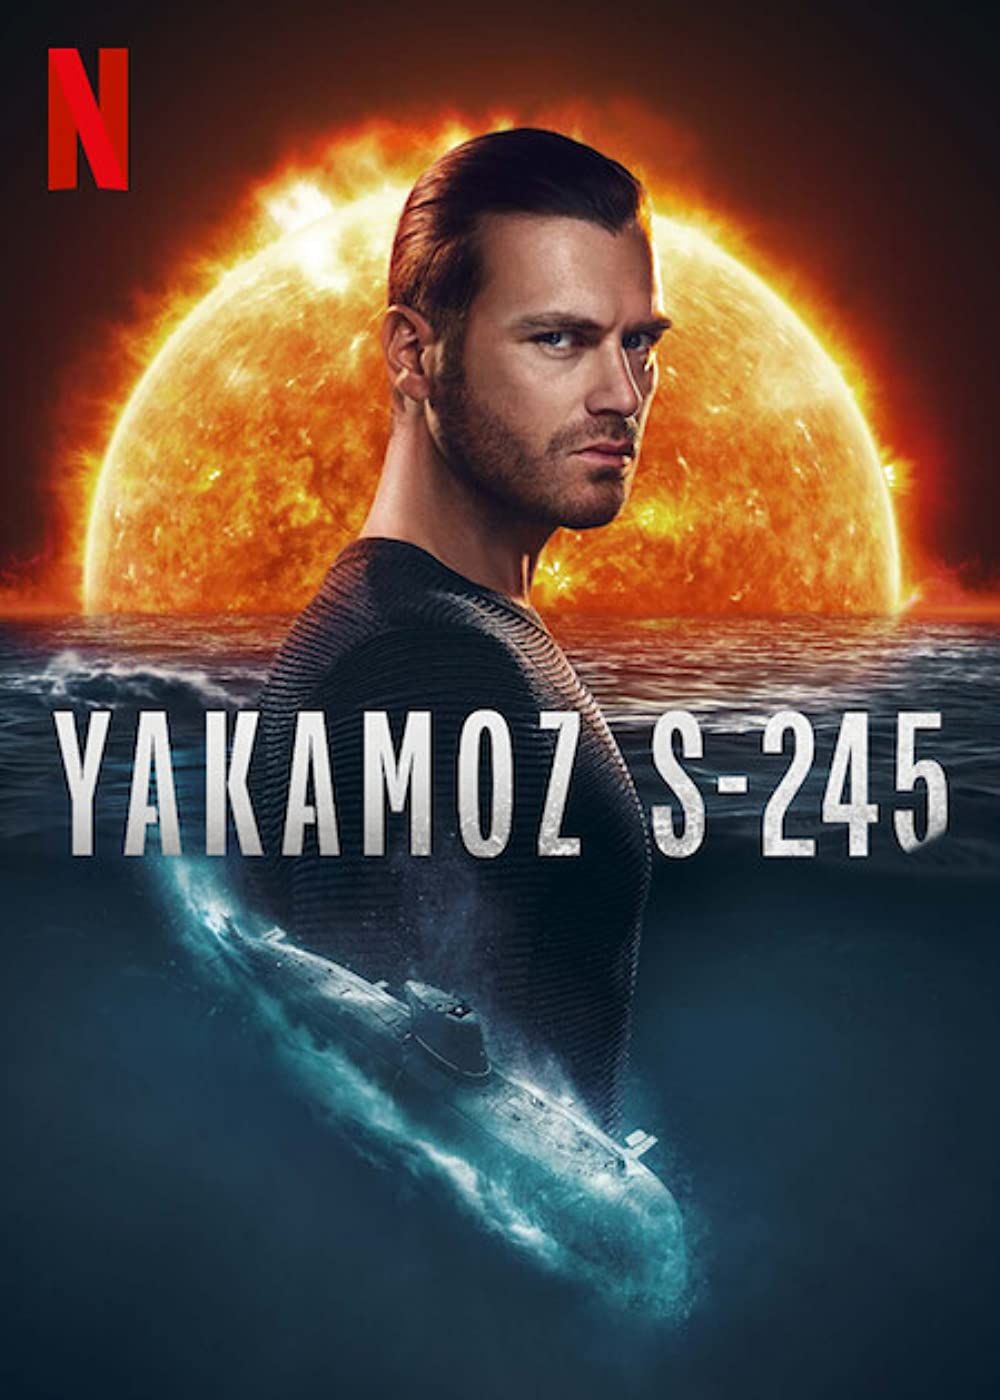 YakamozS245 (2022) Season 1 Hindi Dubbed NF Series HDRip download full movie